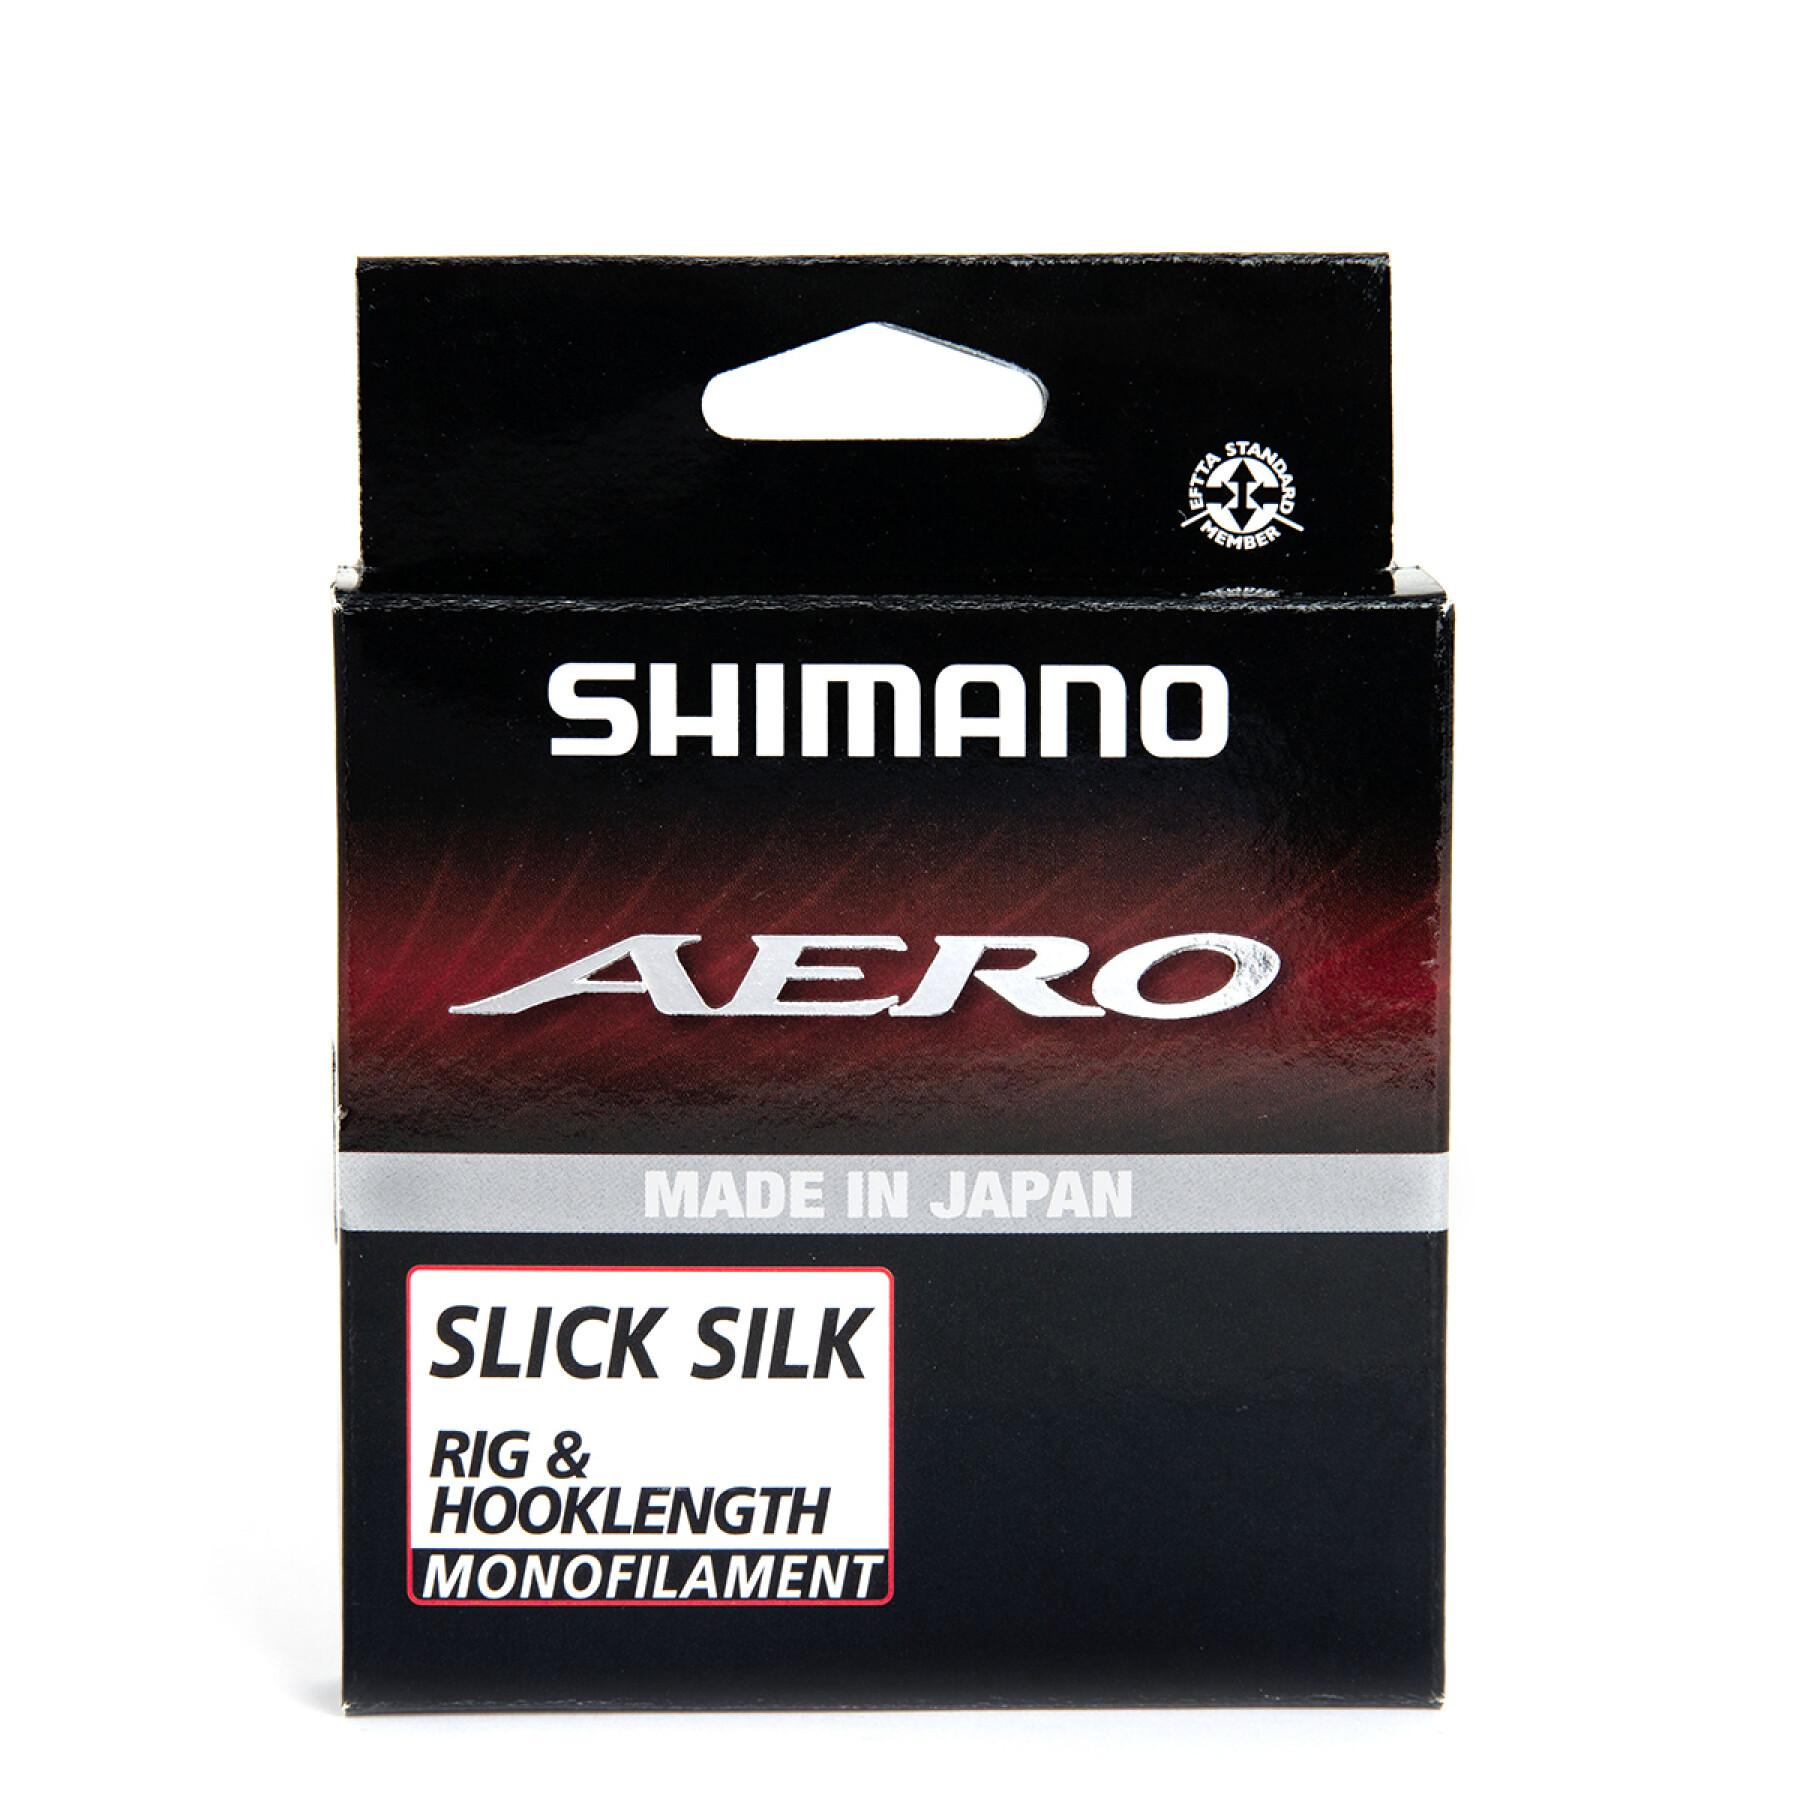 Fluorocarbon Shimano Aero Slick Shock 50 m